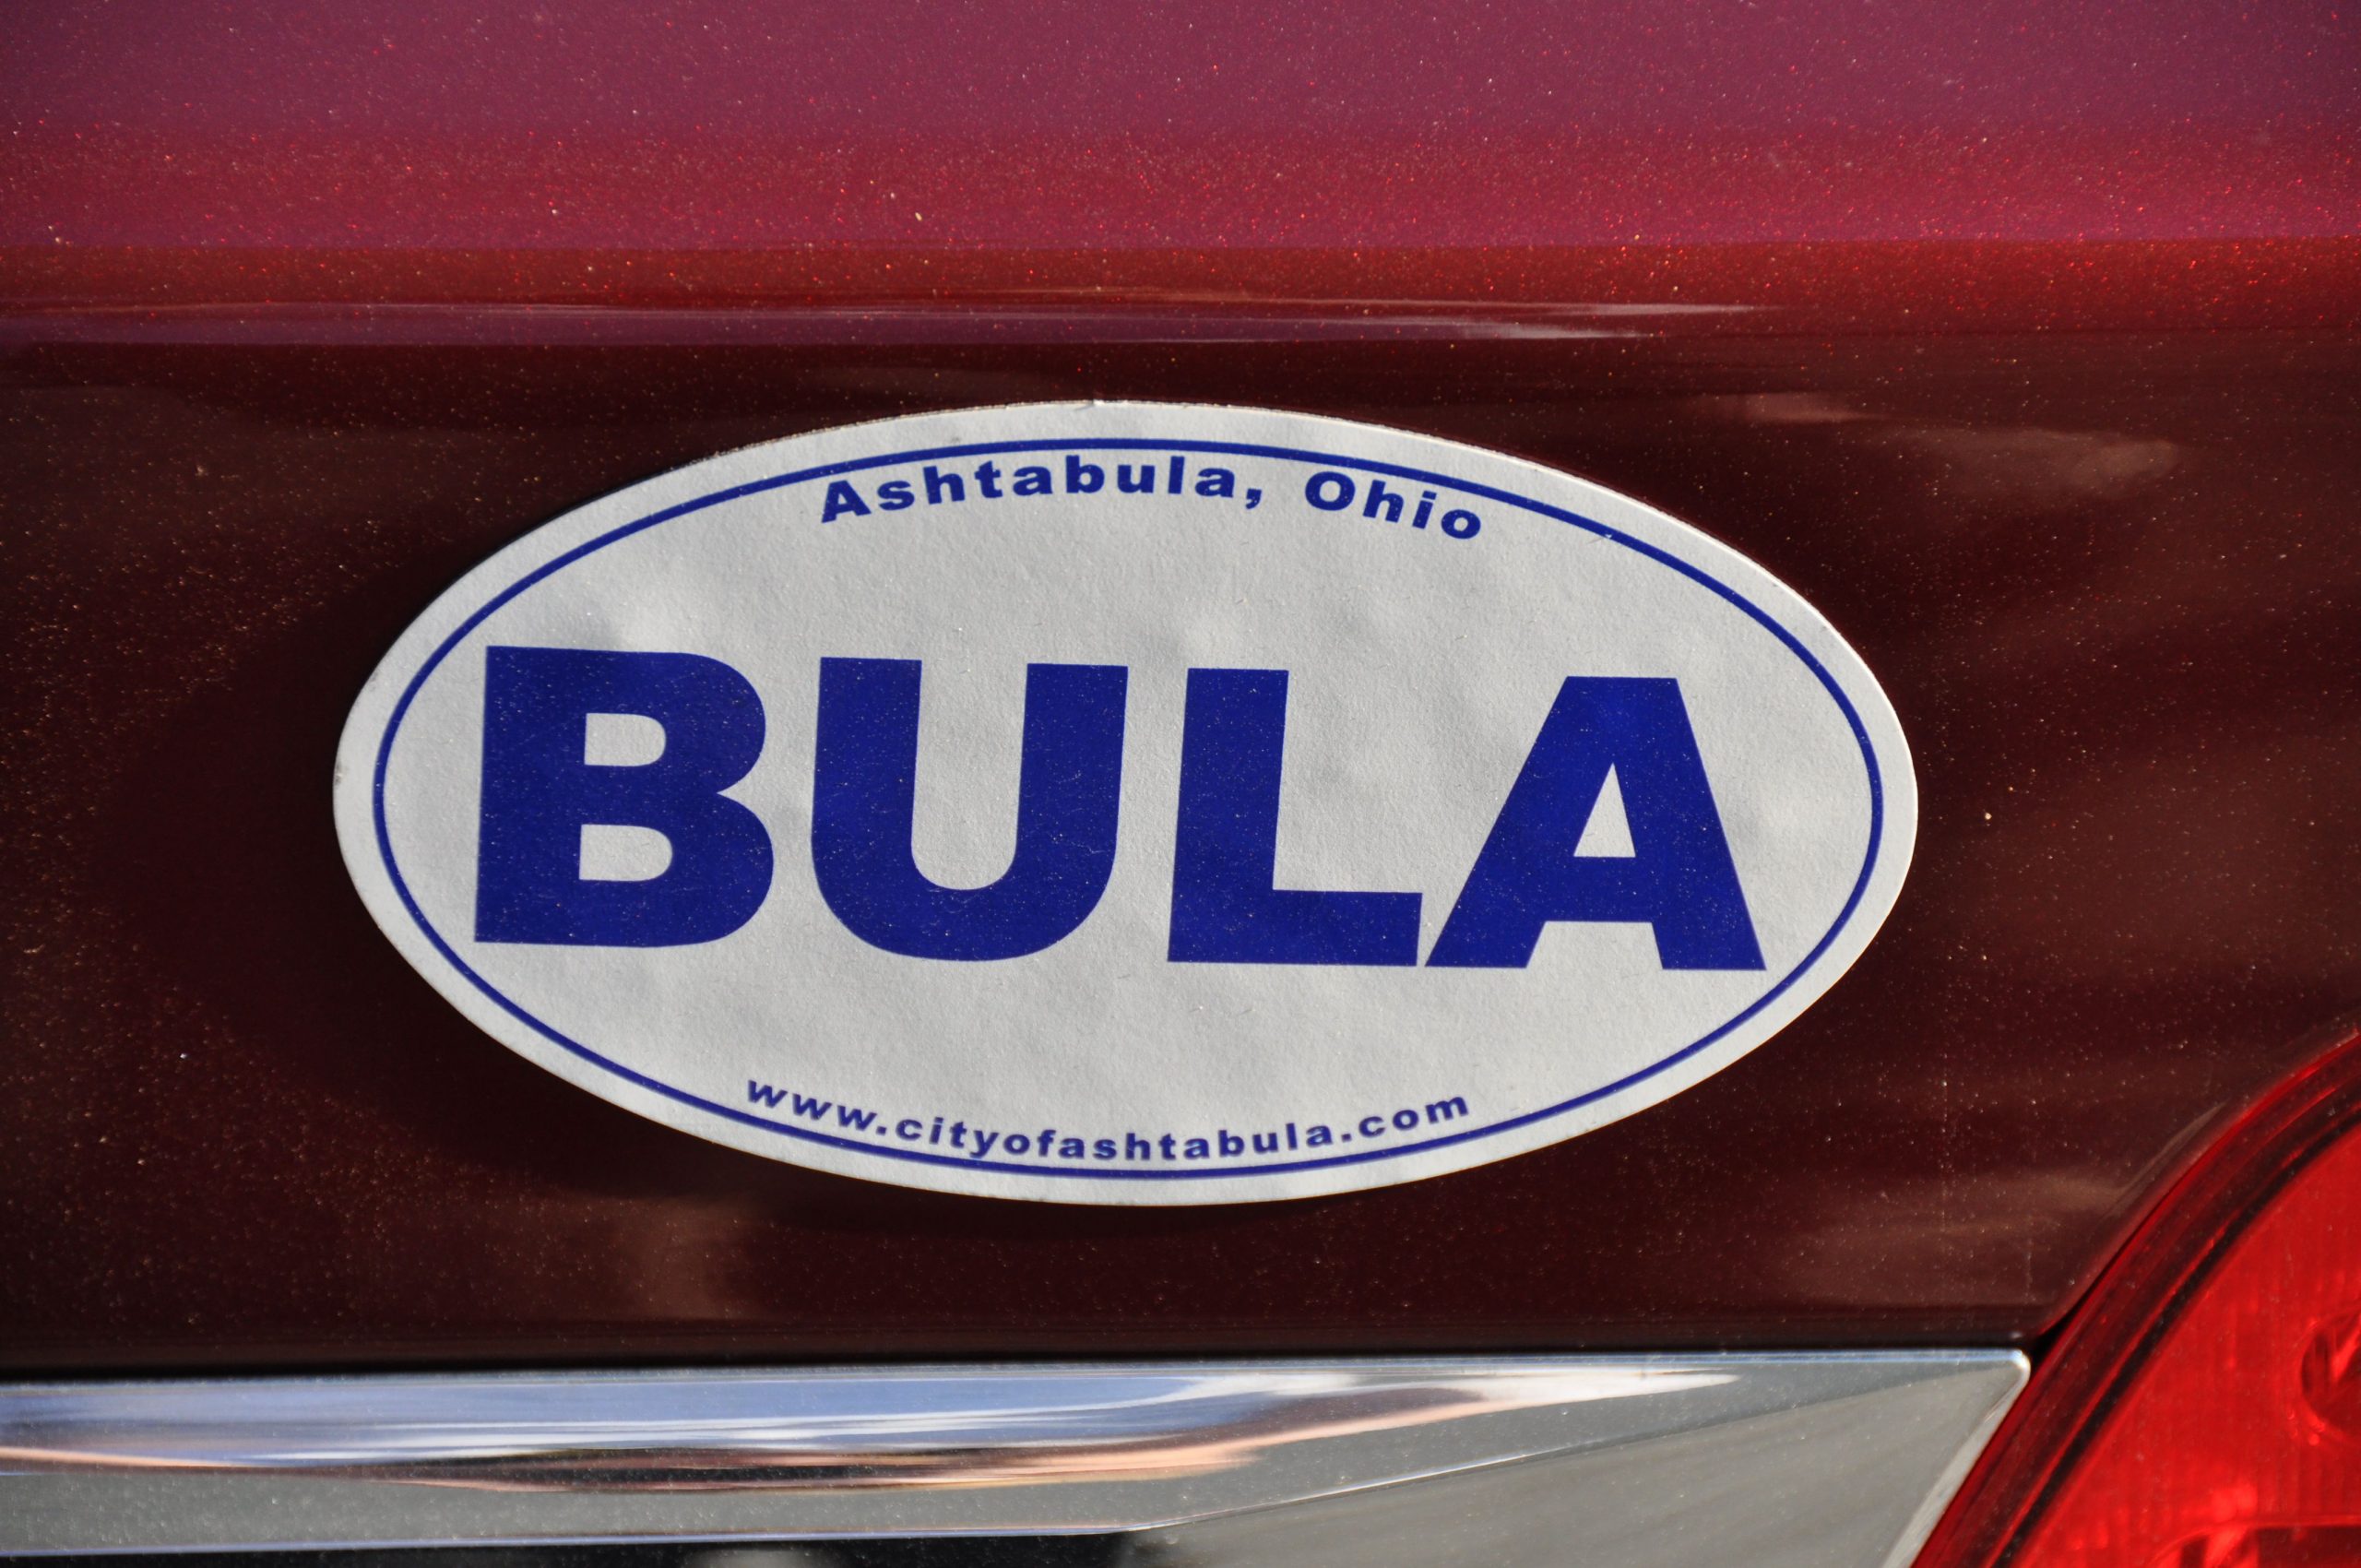 Where can I get a BULA sticker for my car??